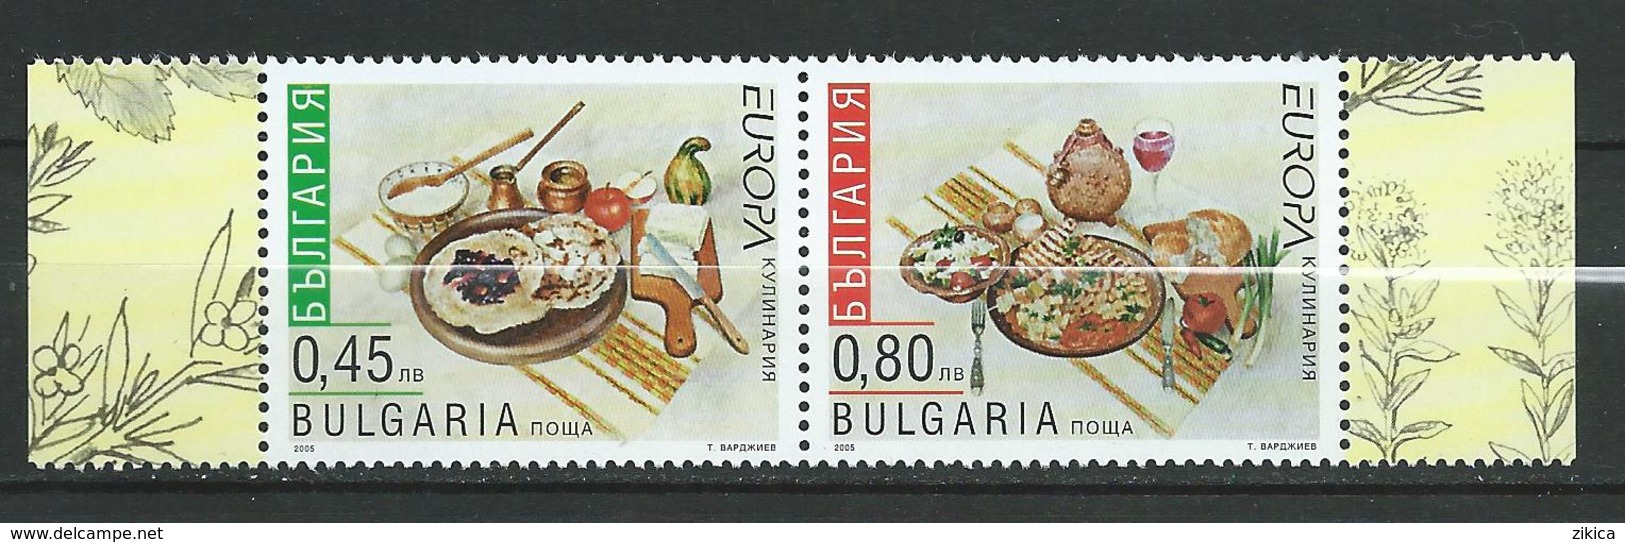 Bulgaria 2005 EUROPA Stamps - Gastronomy. MNH - Neufs